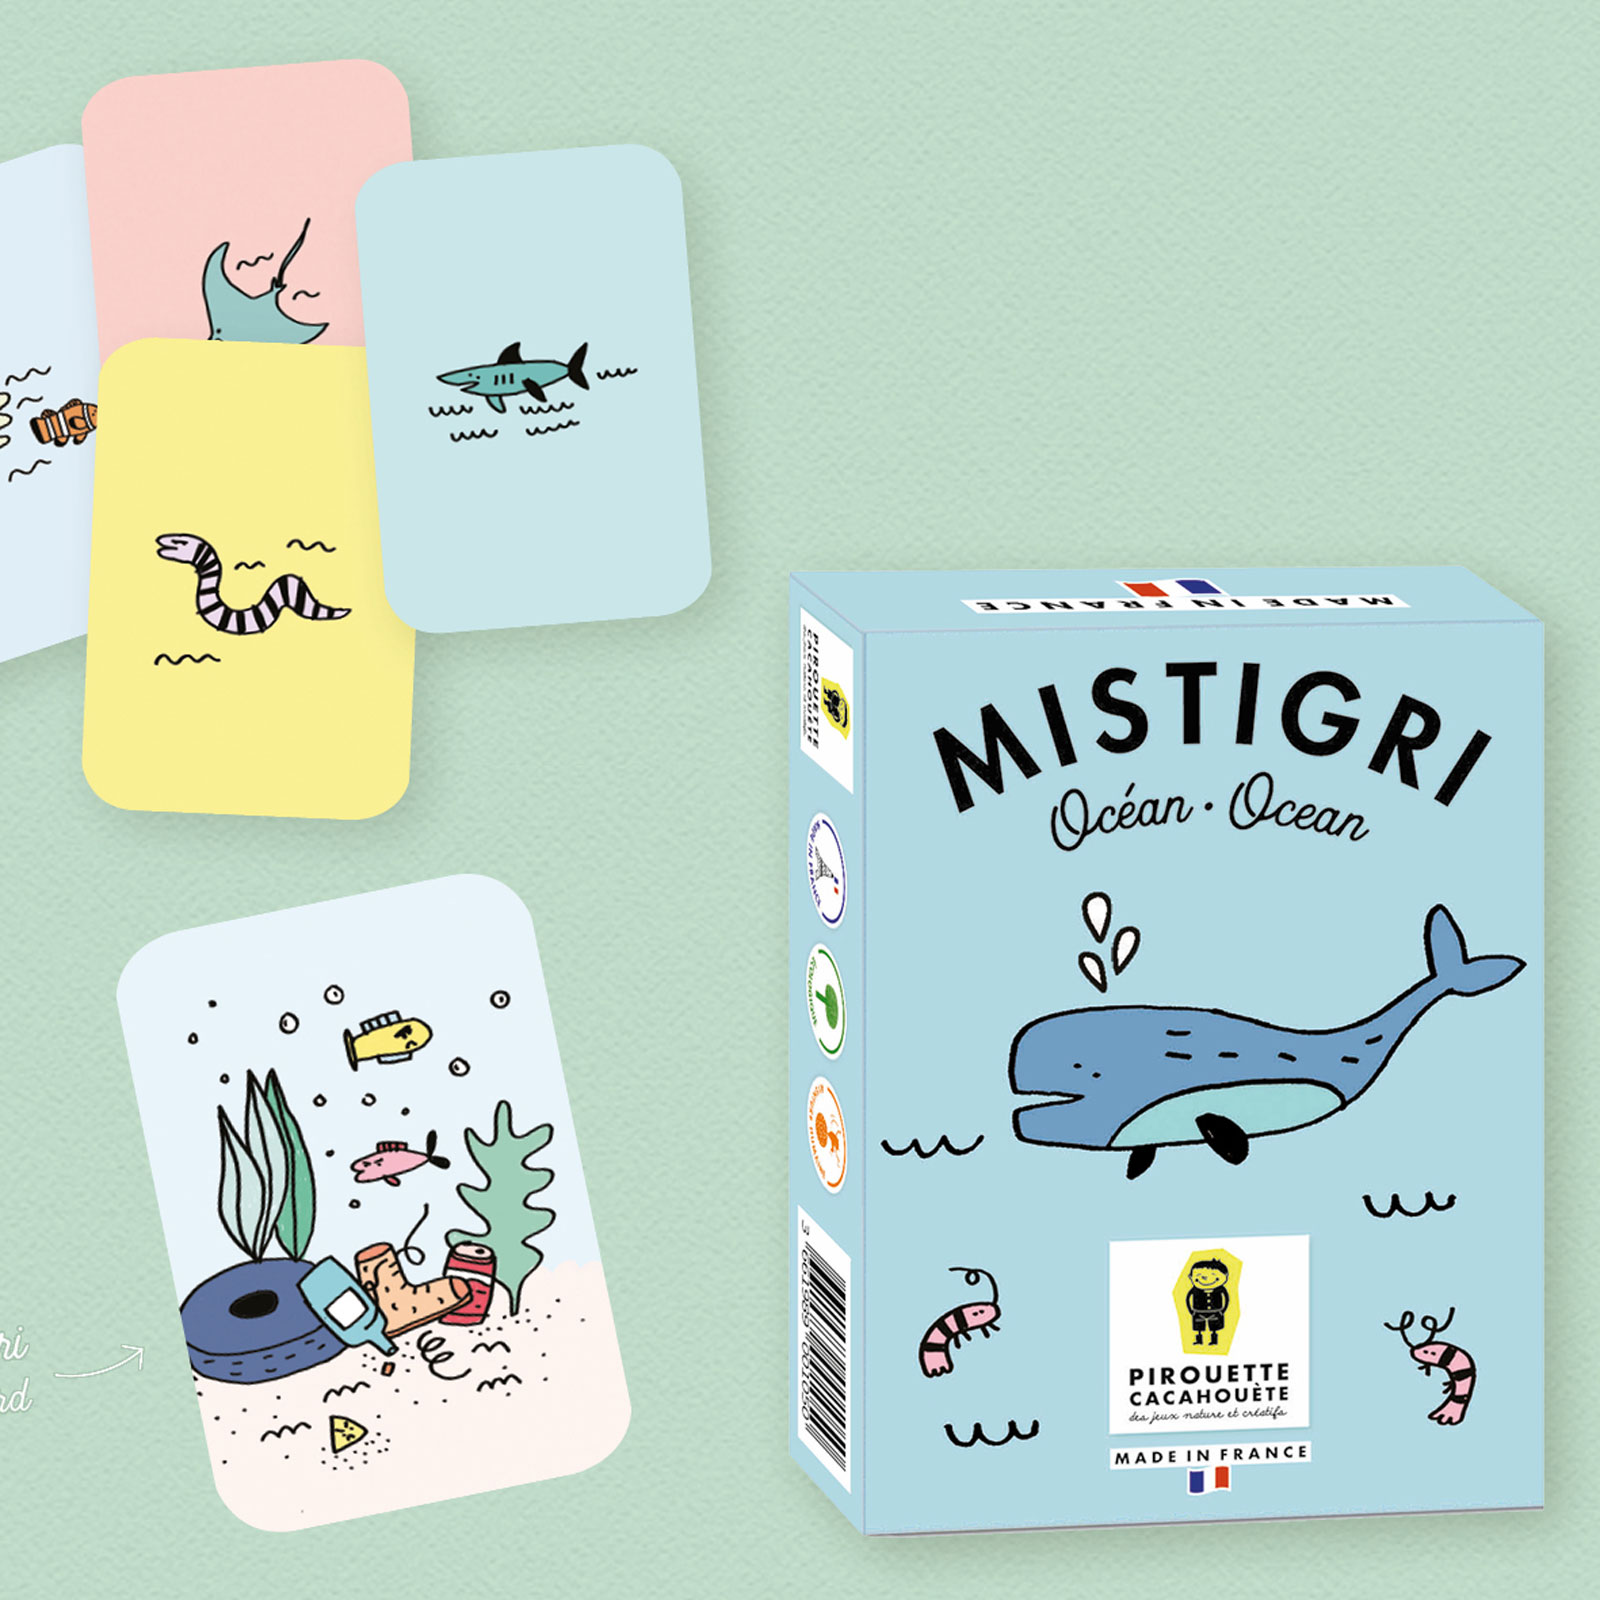 Mistigri playing cards